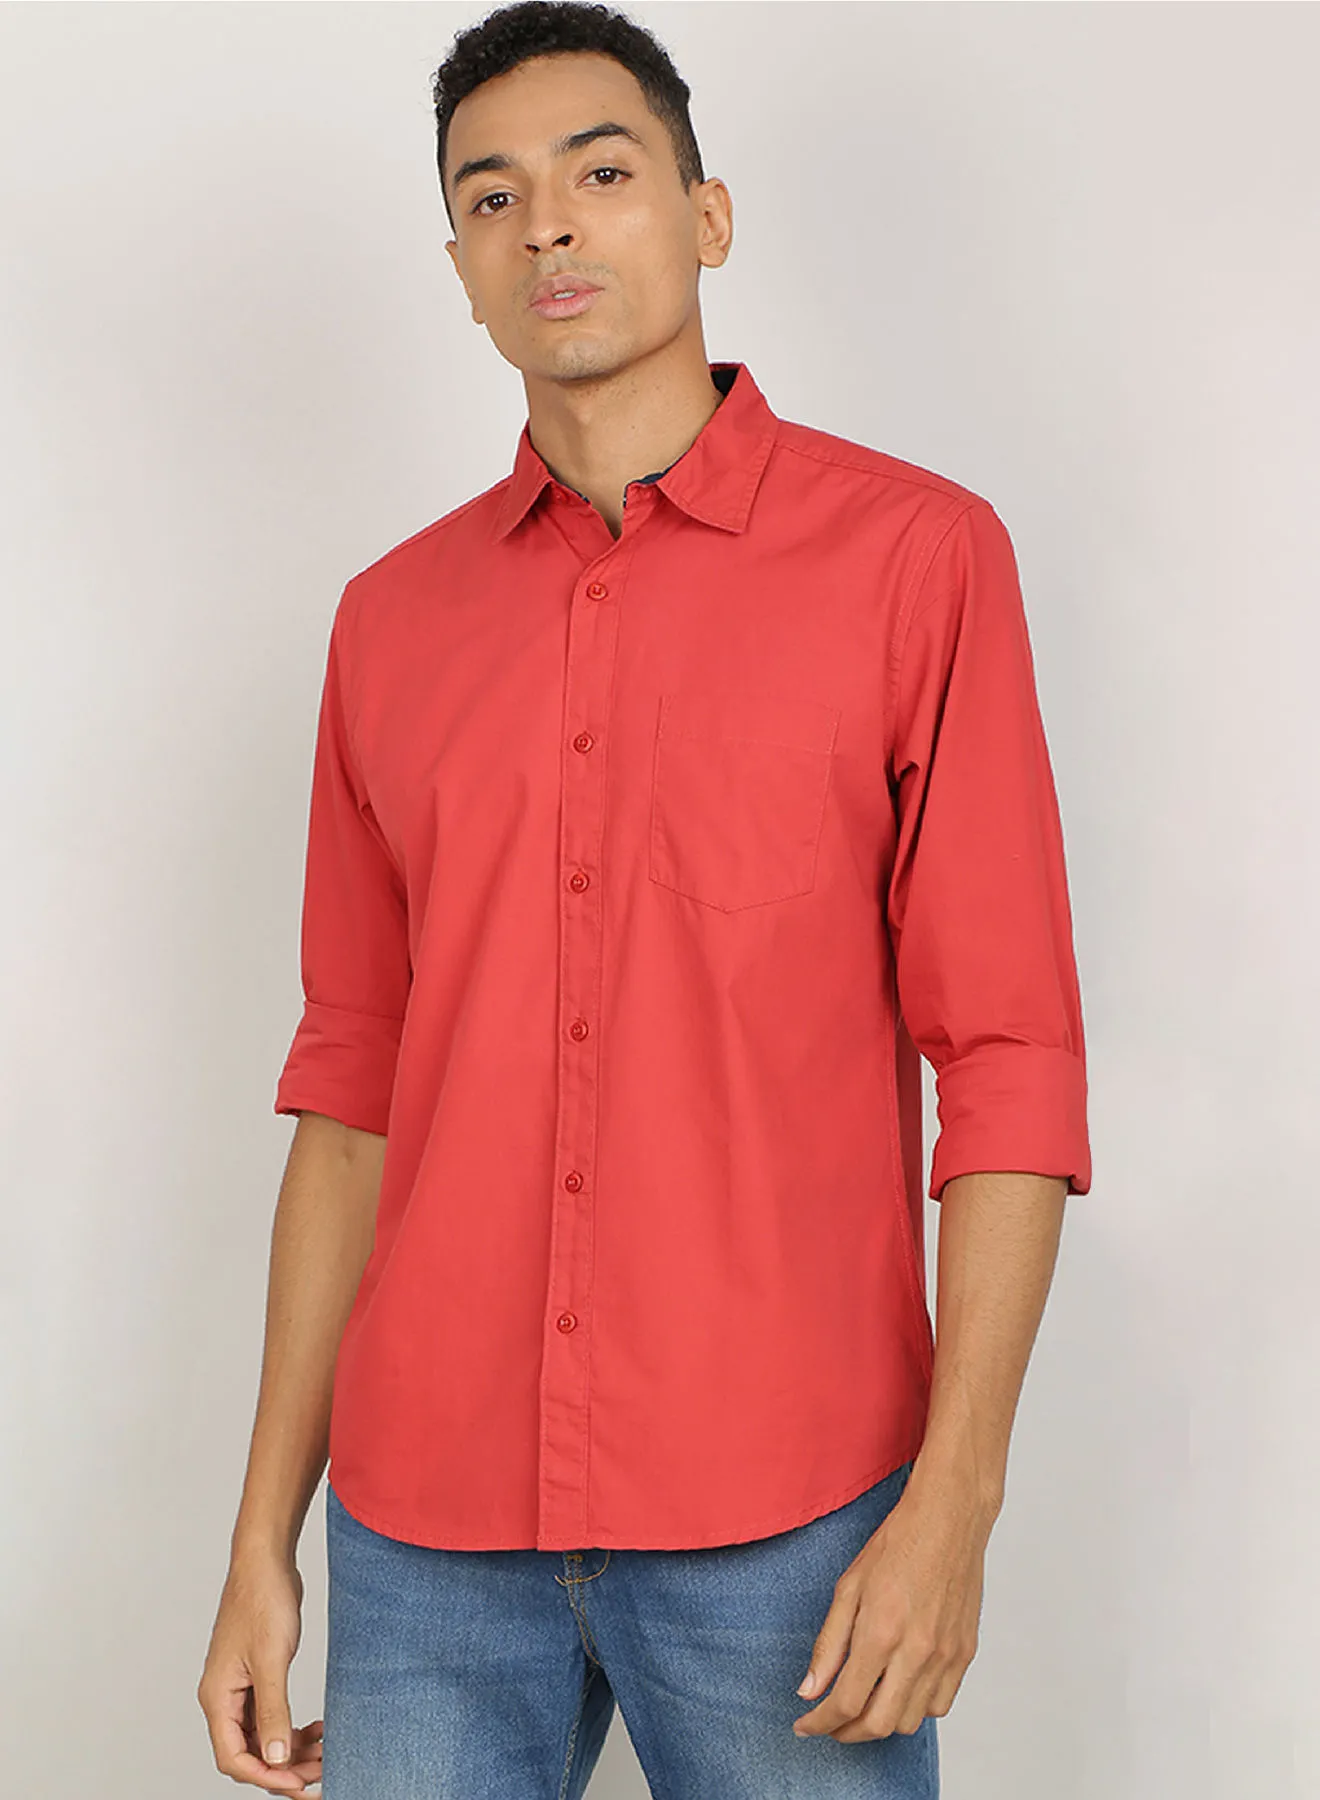 B&C B&C Bold and Classic Plain  Shirt Red